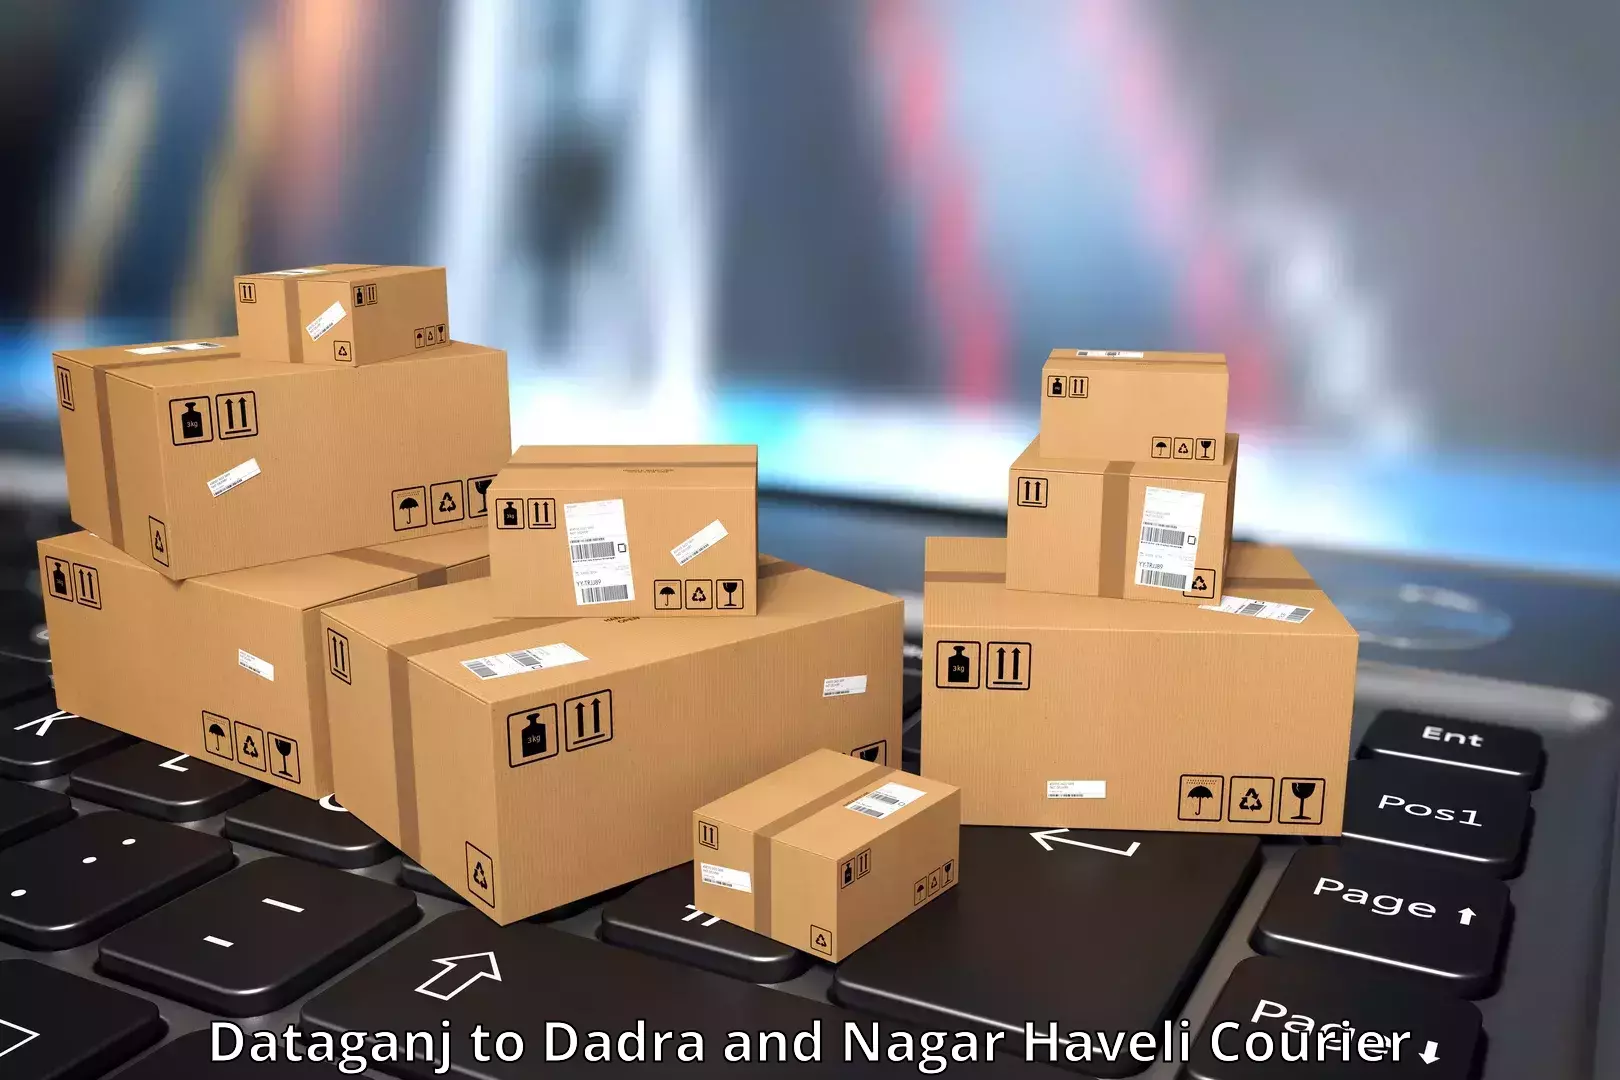 Custom courier packaging Dataganj to Dadra and Nagar Haveli